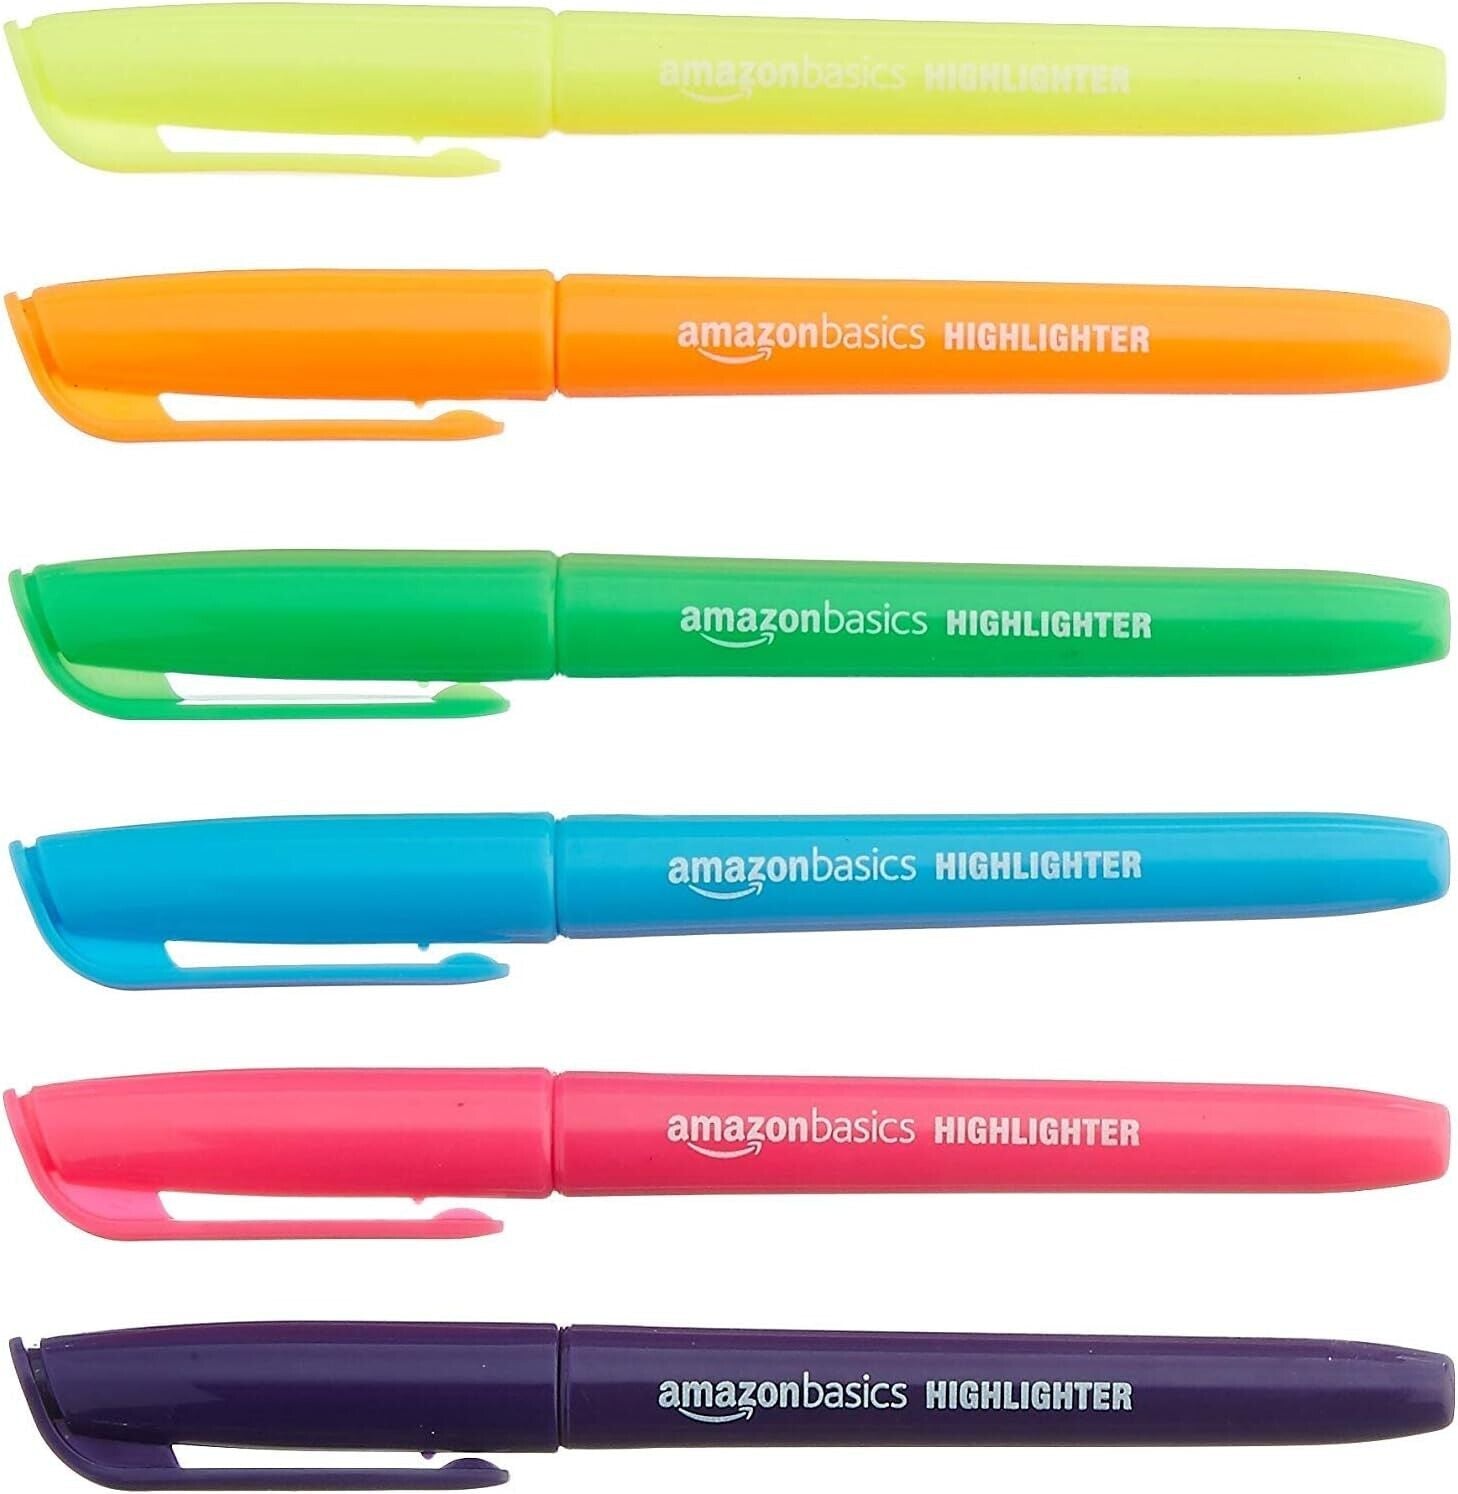 Tükenmez Kalem Amazon Basics Textmarker in verschiedenen leuchtenden Farben, 12 Stück - NEU